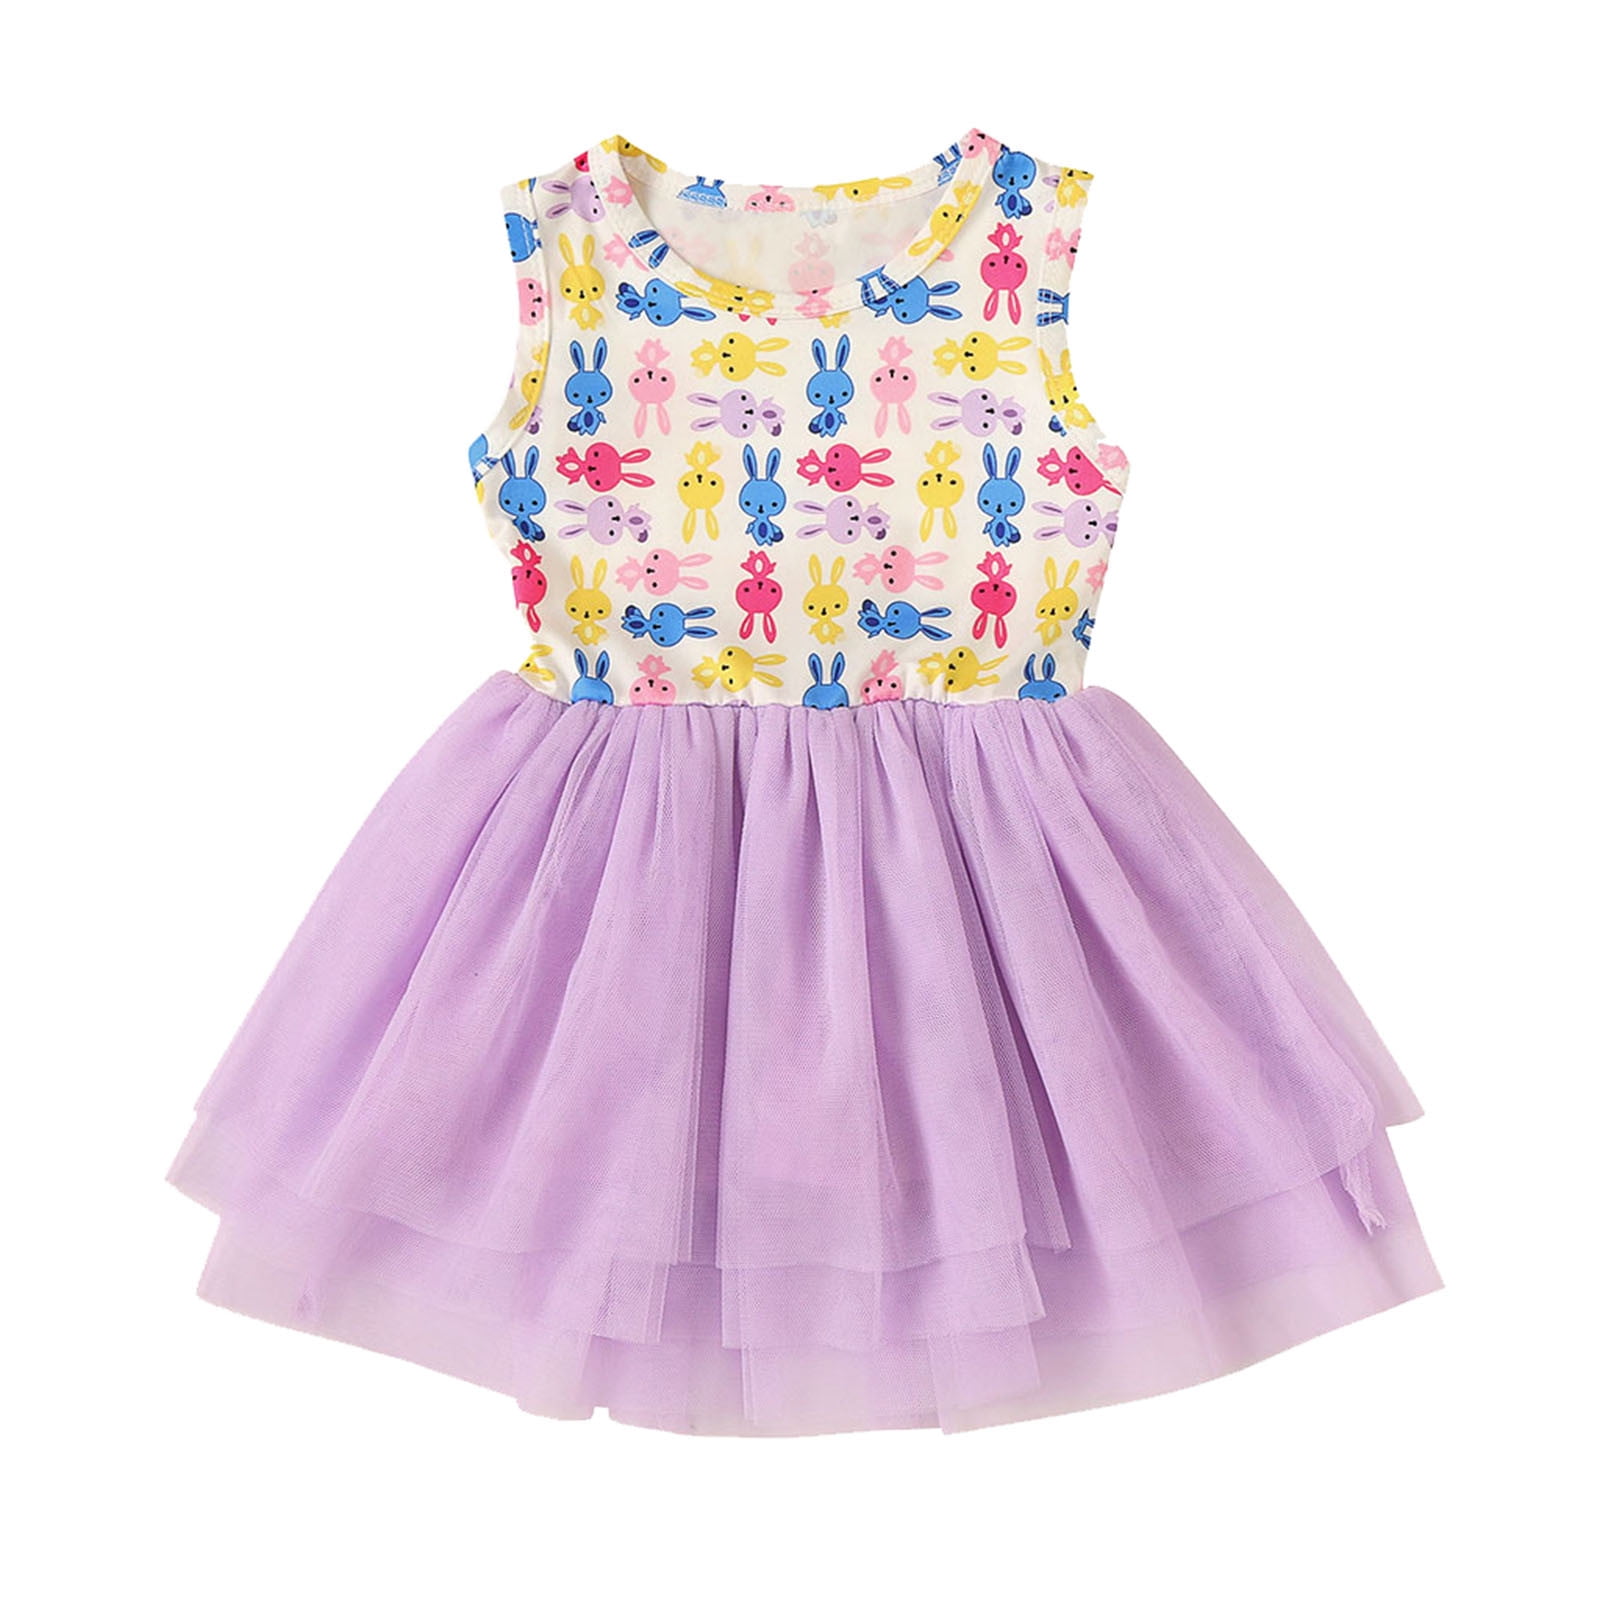 Girls Easter Dresses - Walmart.com ...